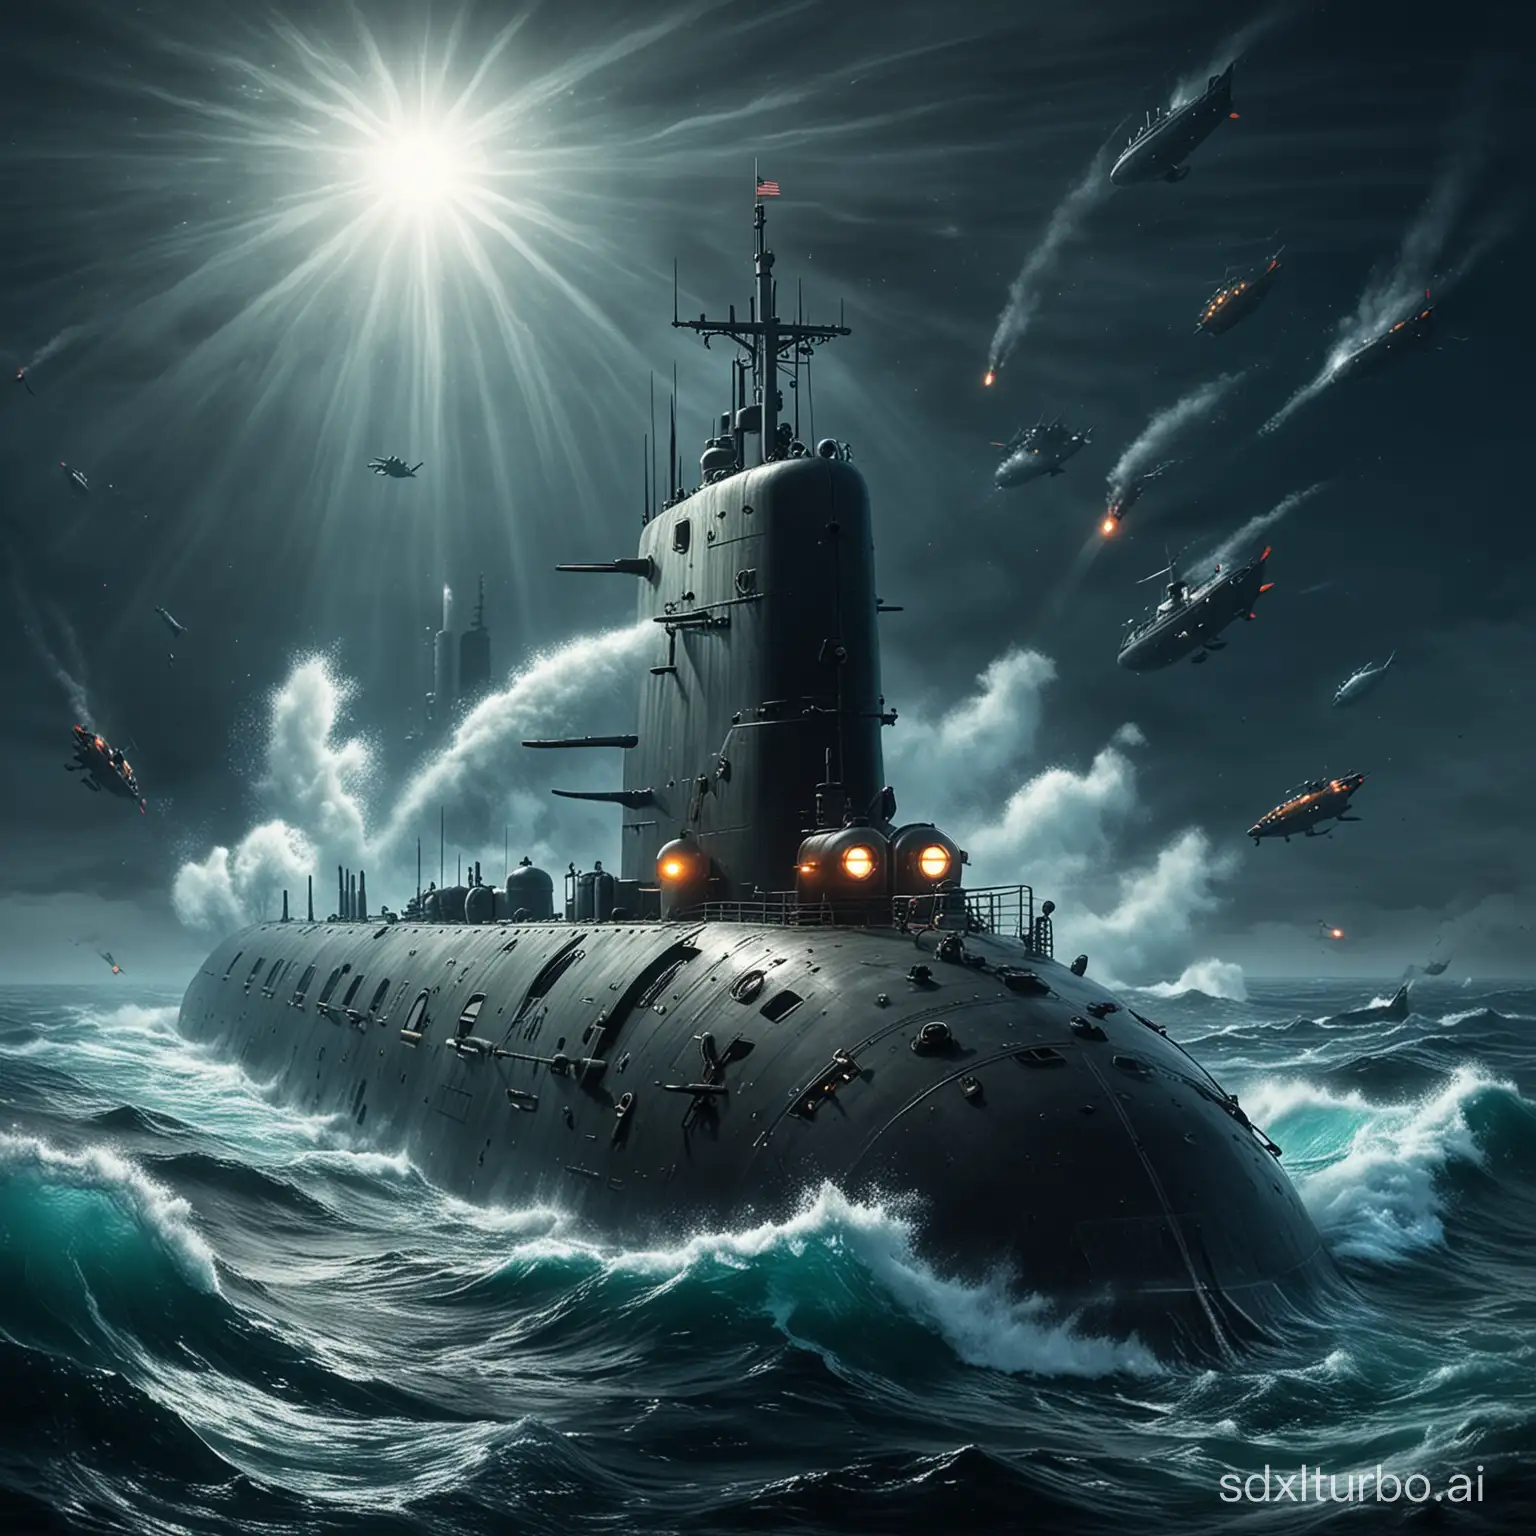 Underwater-Naval-Warfare-Submarines-in-the-Deep-Sea